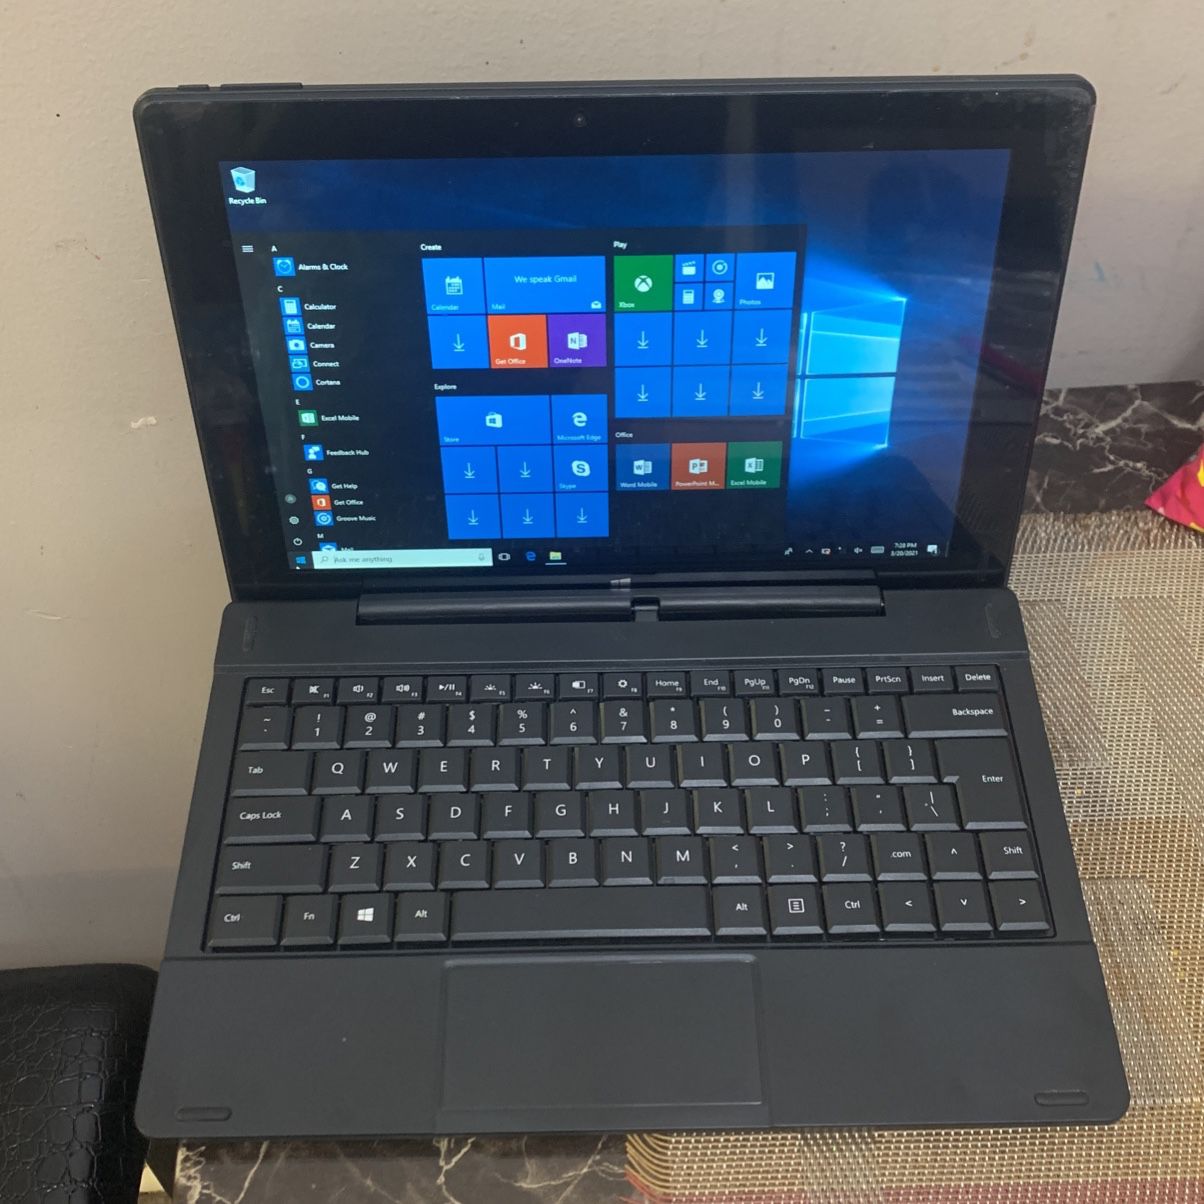 Smartab Intel Atom Tablet PC Laptop 2gb Ra Brand New m And 32gb ssd Hard Drive With Windows 10